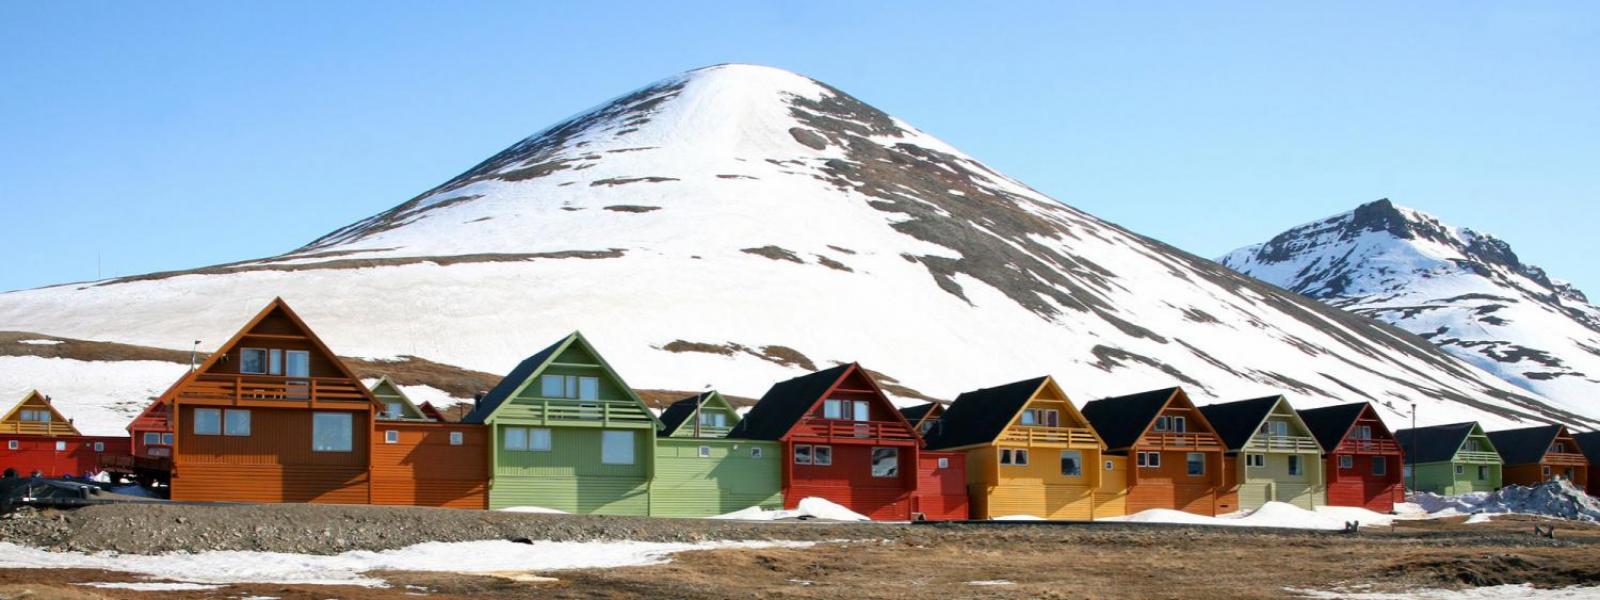 Svalbard%2C-Longyear-city%2C-Norway_Header.jpg?itok=kiXl0Mgf&c=7c08e1b31feb5713c5b794c96cf6a8a6